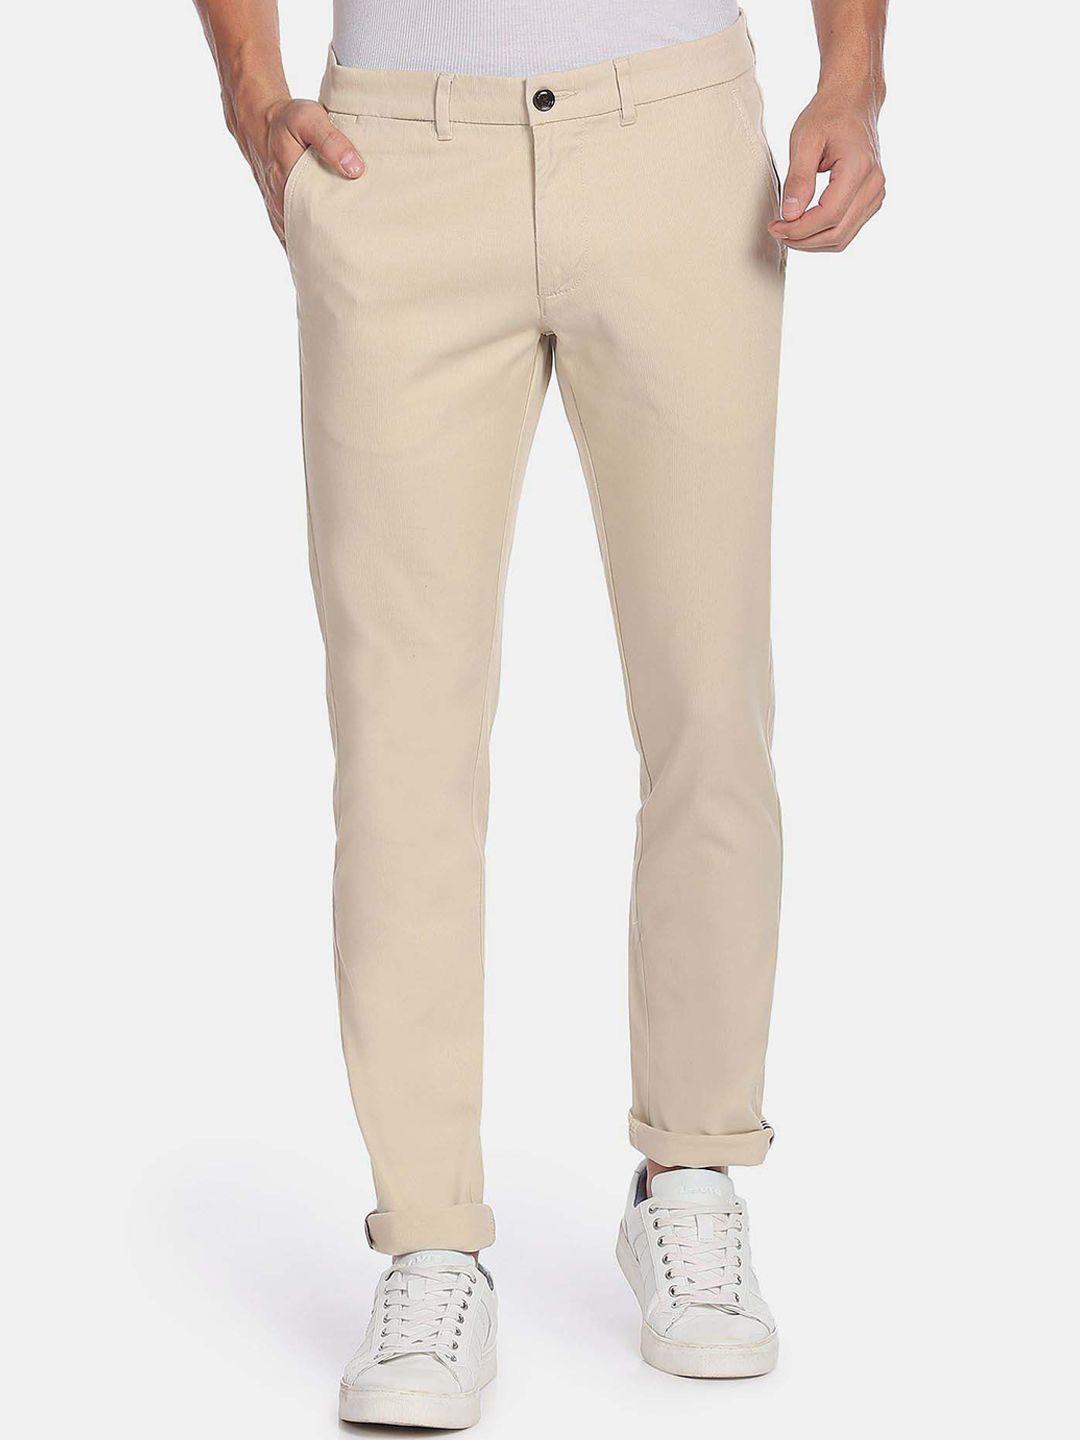 arrow-sport-men-cotton-slim-fit-low-rise-chinos-trousers